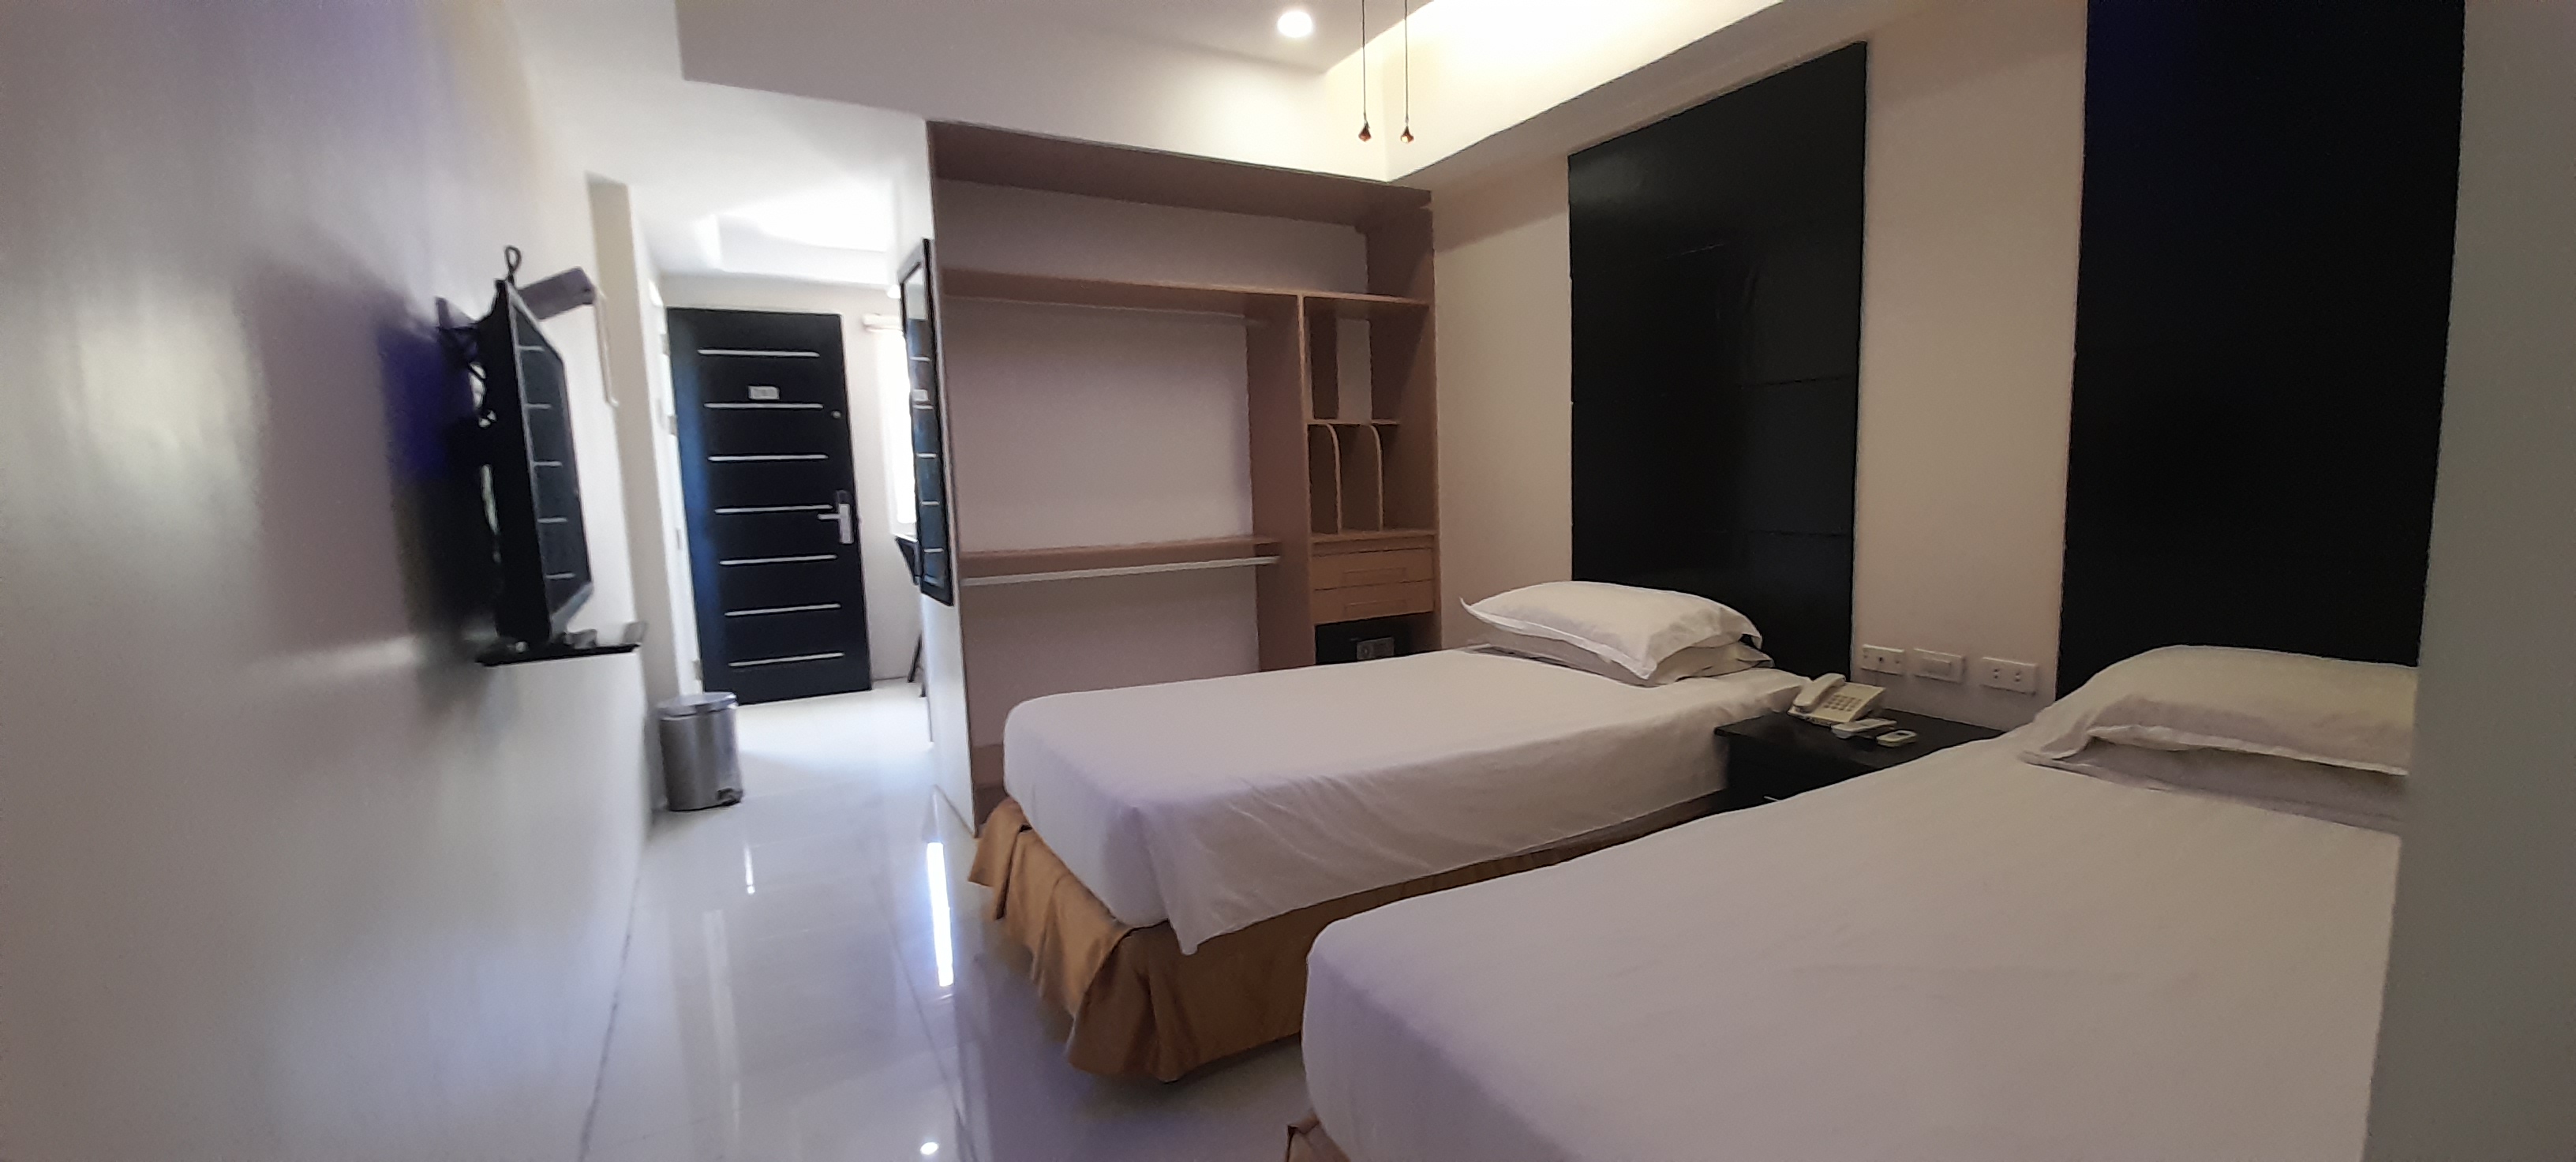 fully-furnished-studio-apartment-in-mandaue-city-cebu